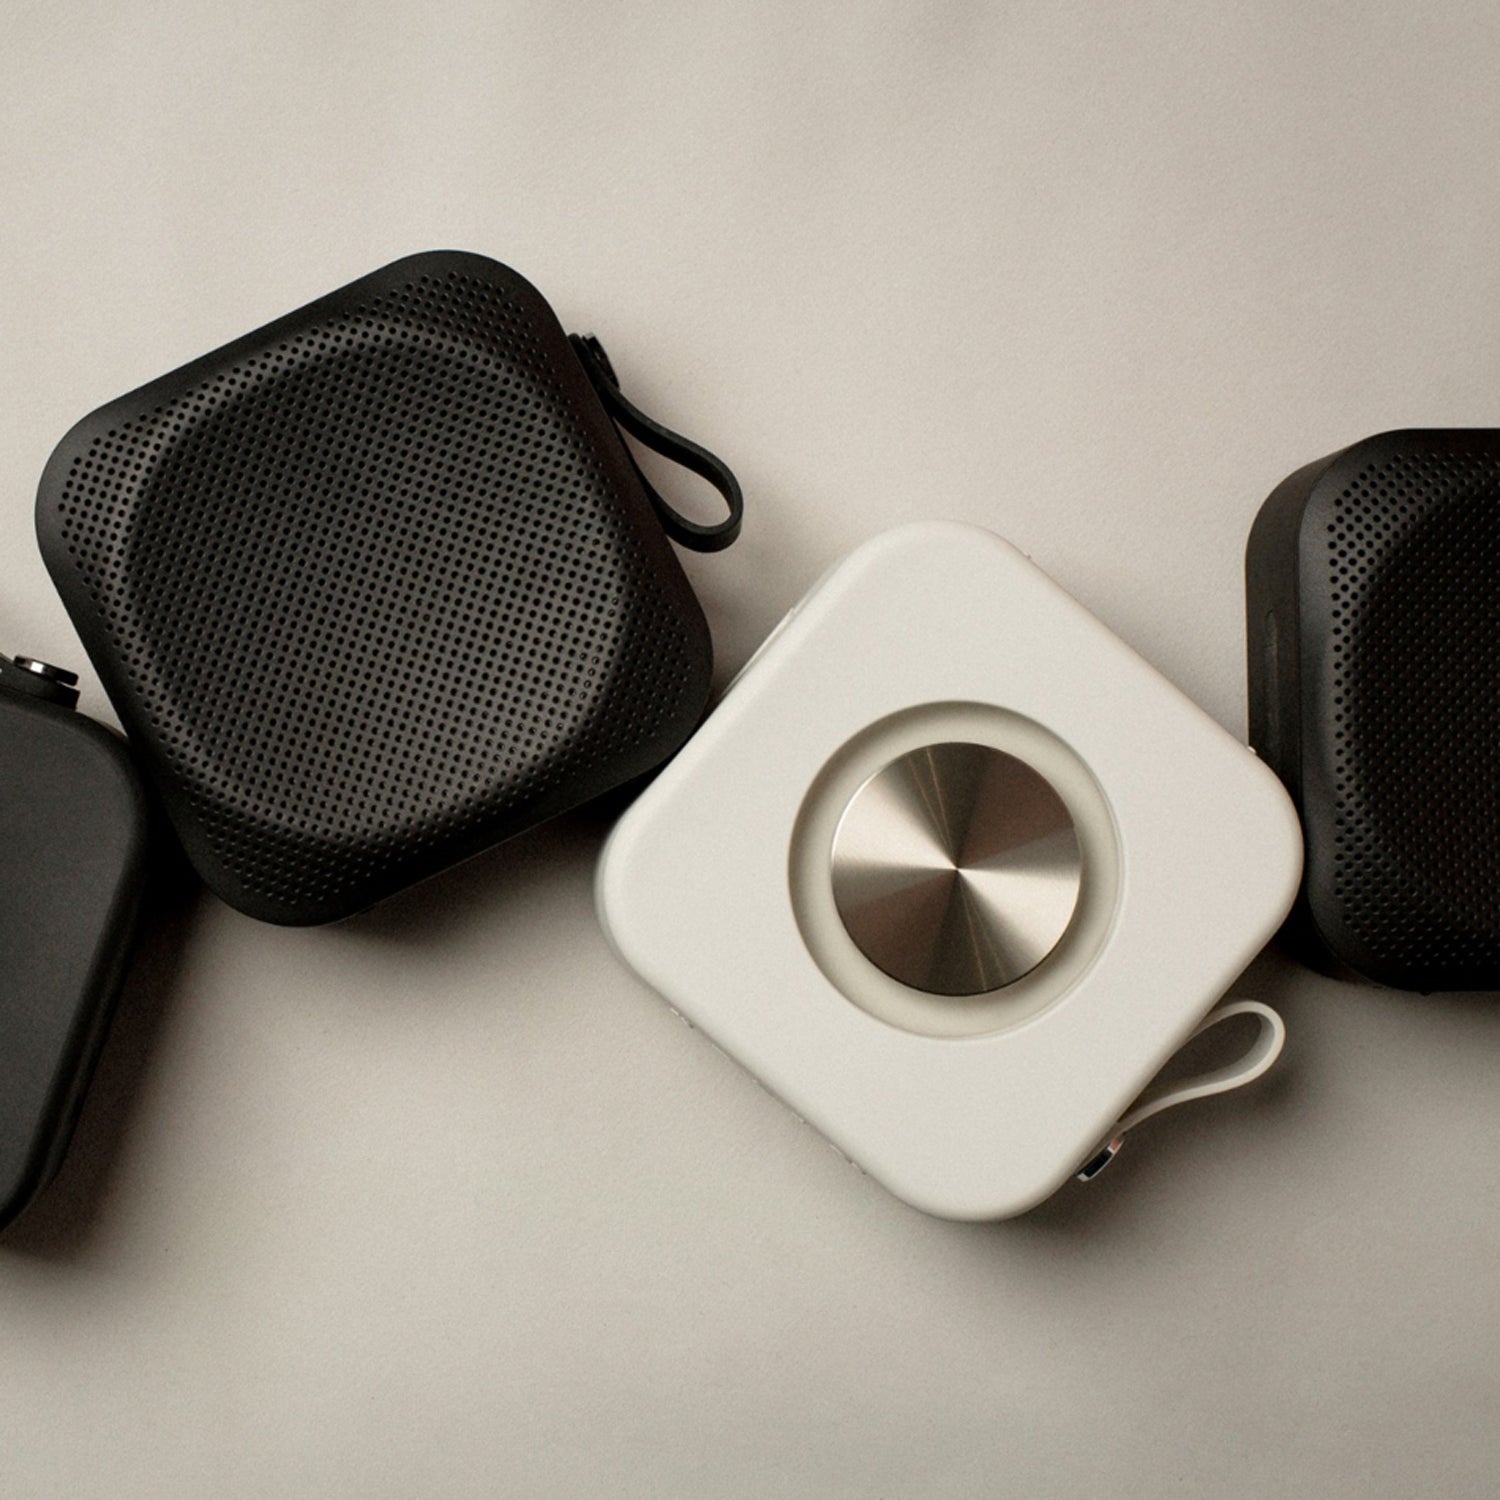 Sudio F2 Portable Bluetooth Speaker